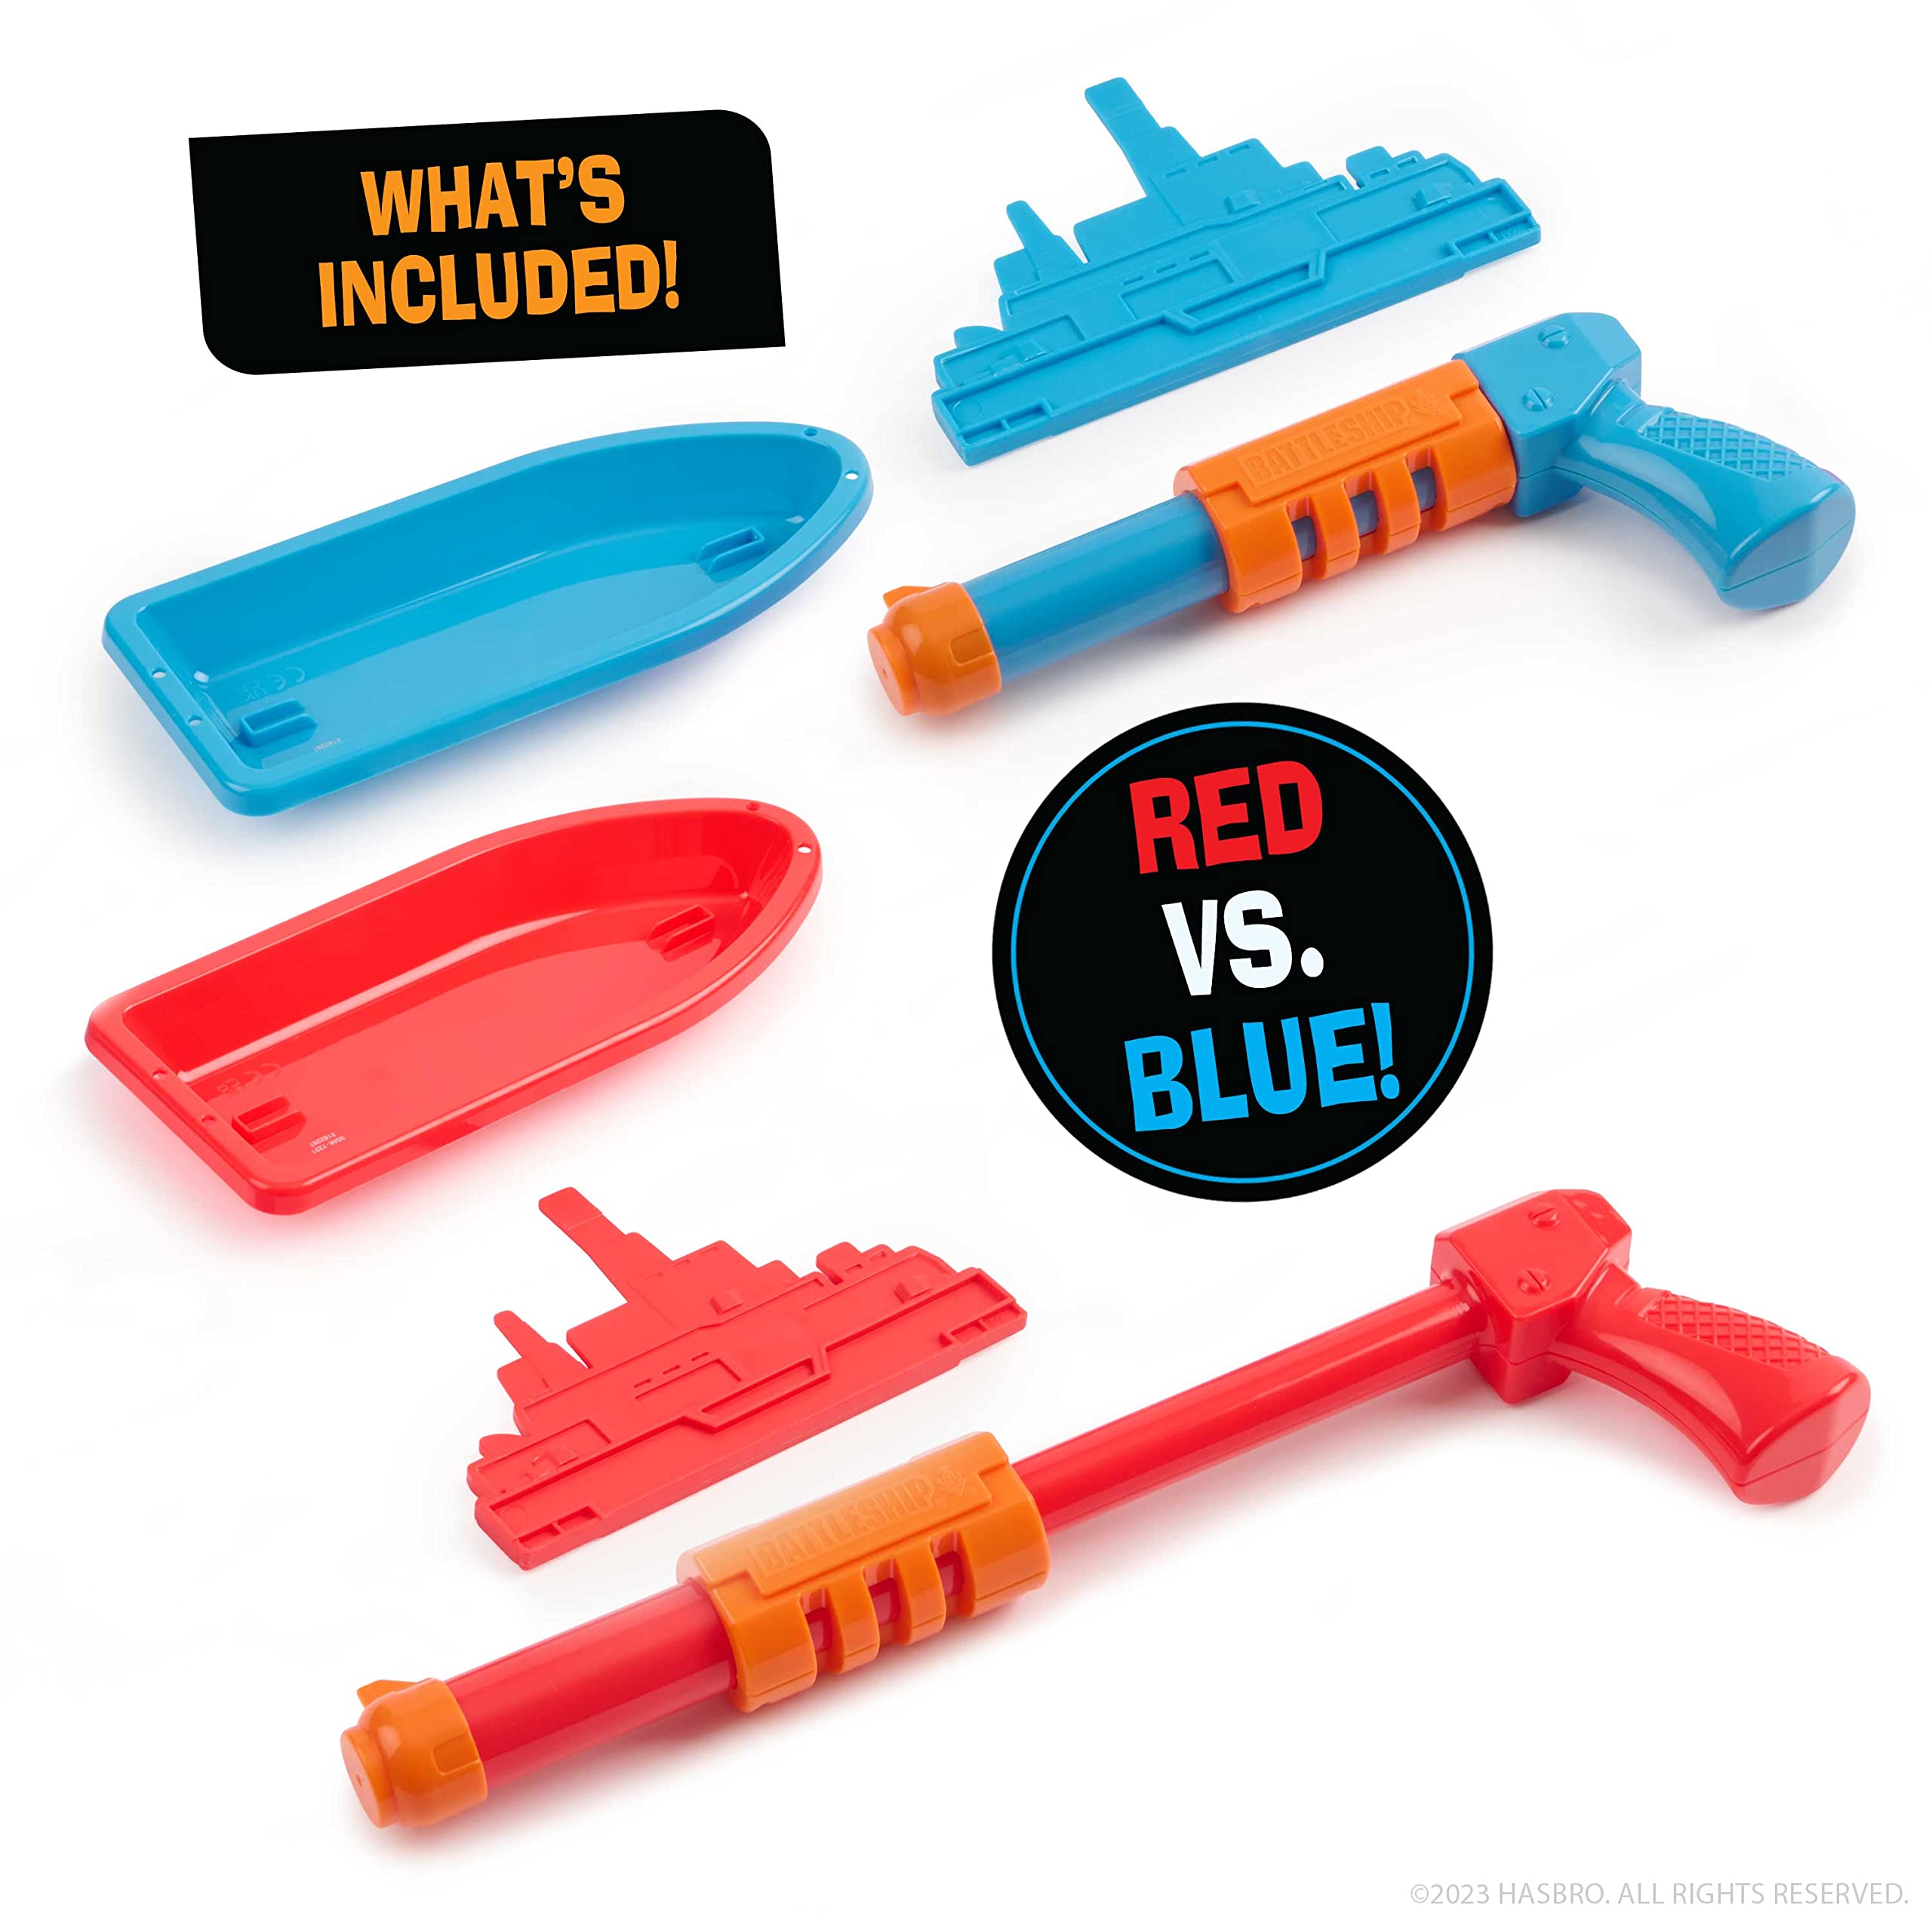 Hasbro Battleship Splash Game – Backyard Water Toys for Outdoor Summer Fun